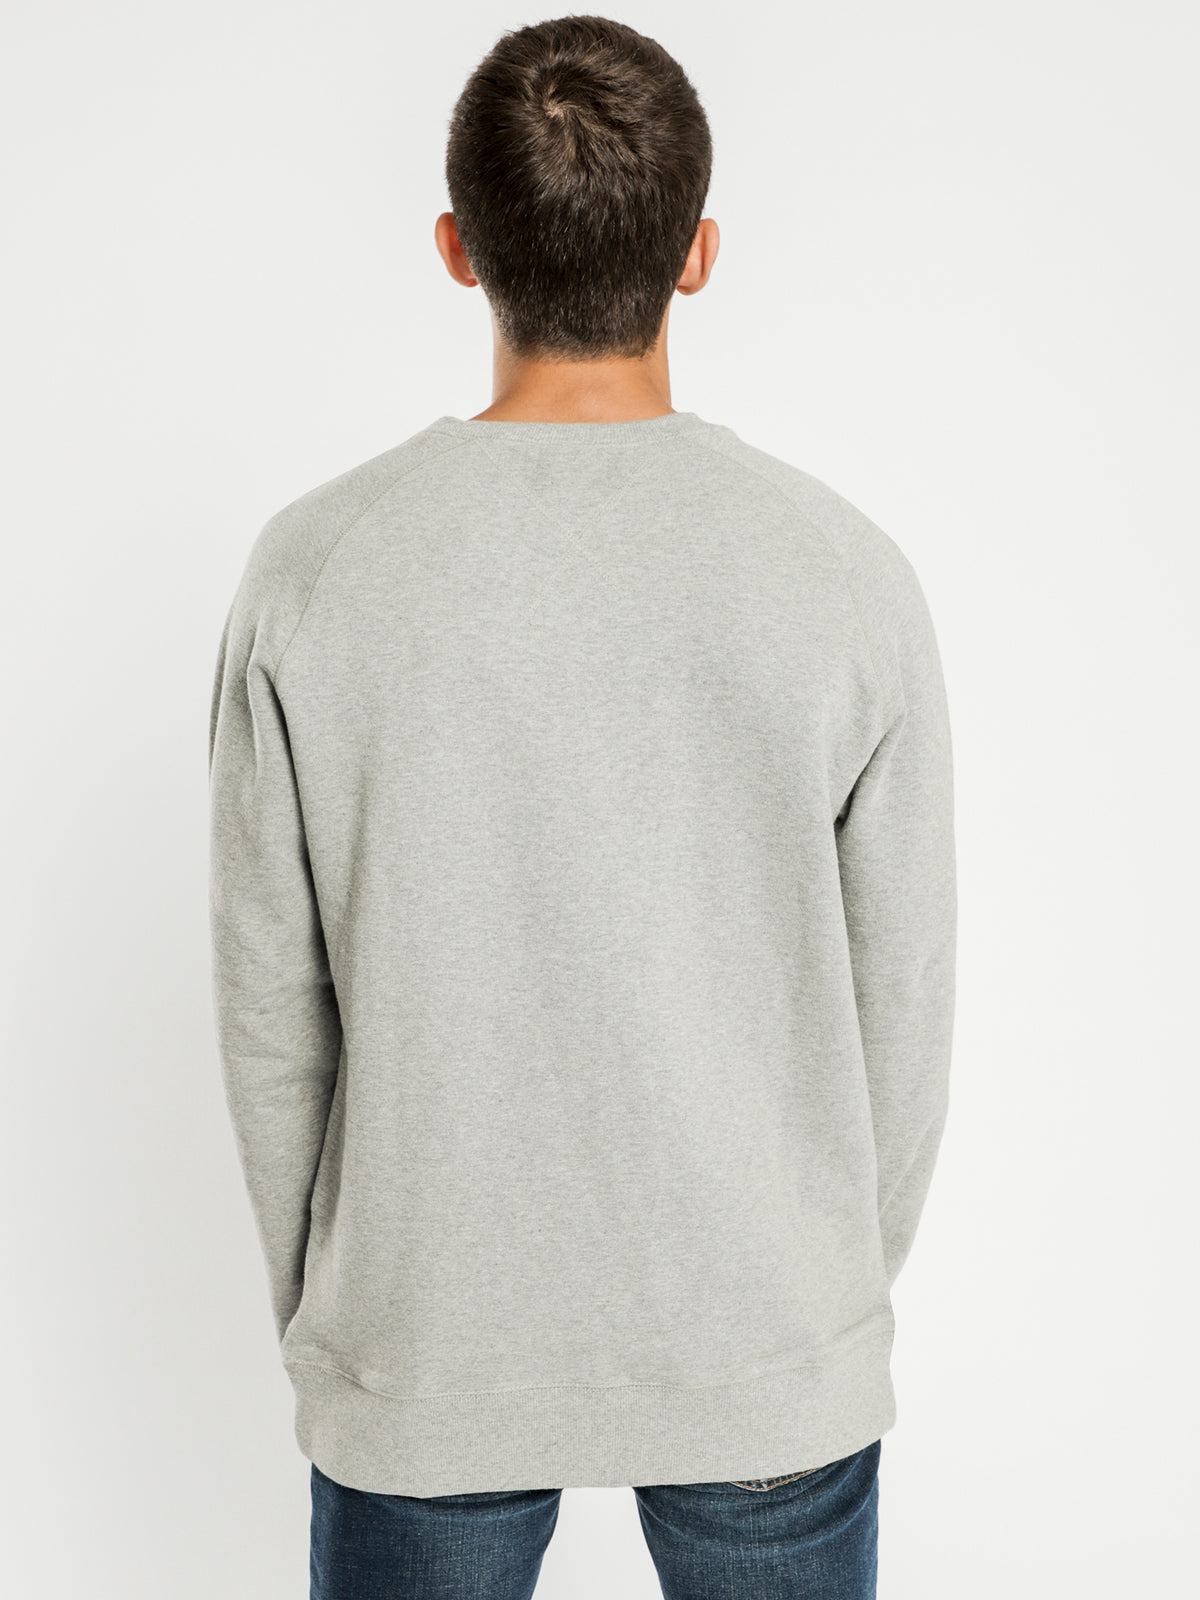 Samuel Logo Sweatshirt in Grey